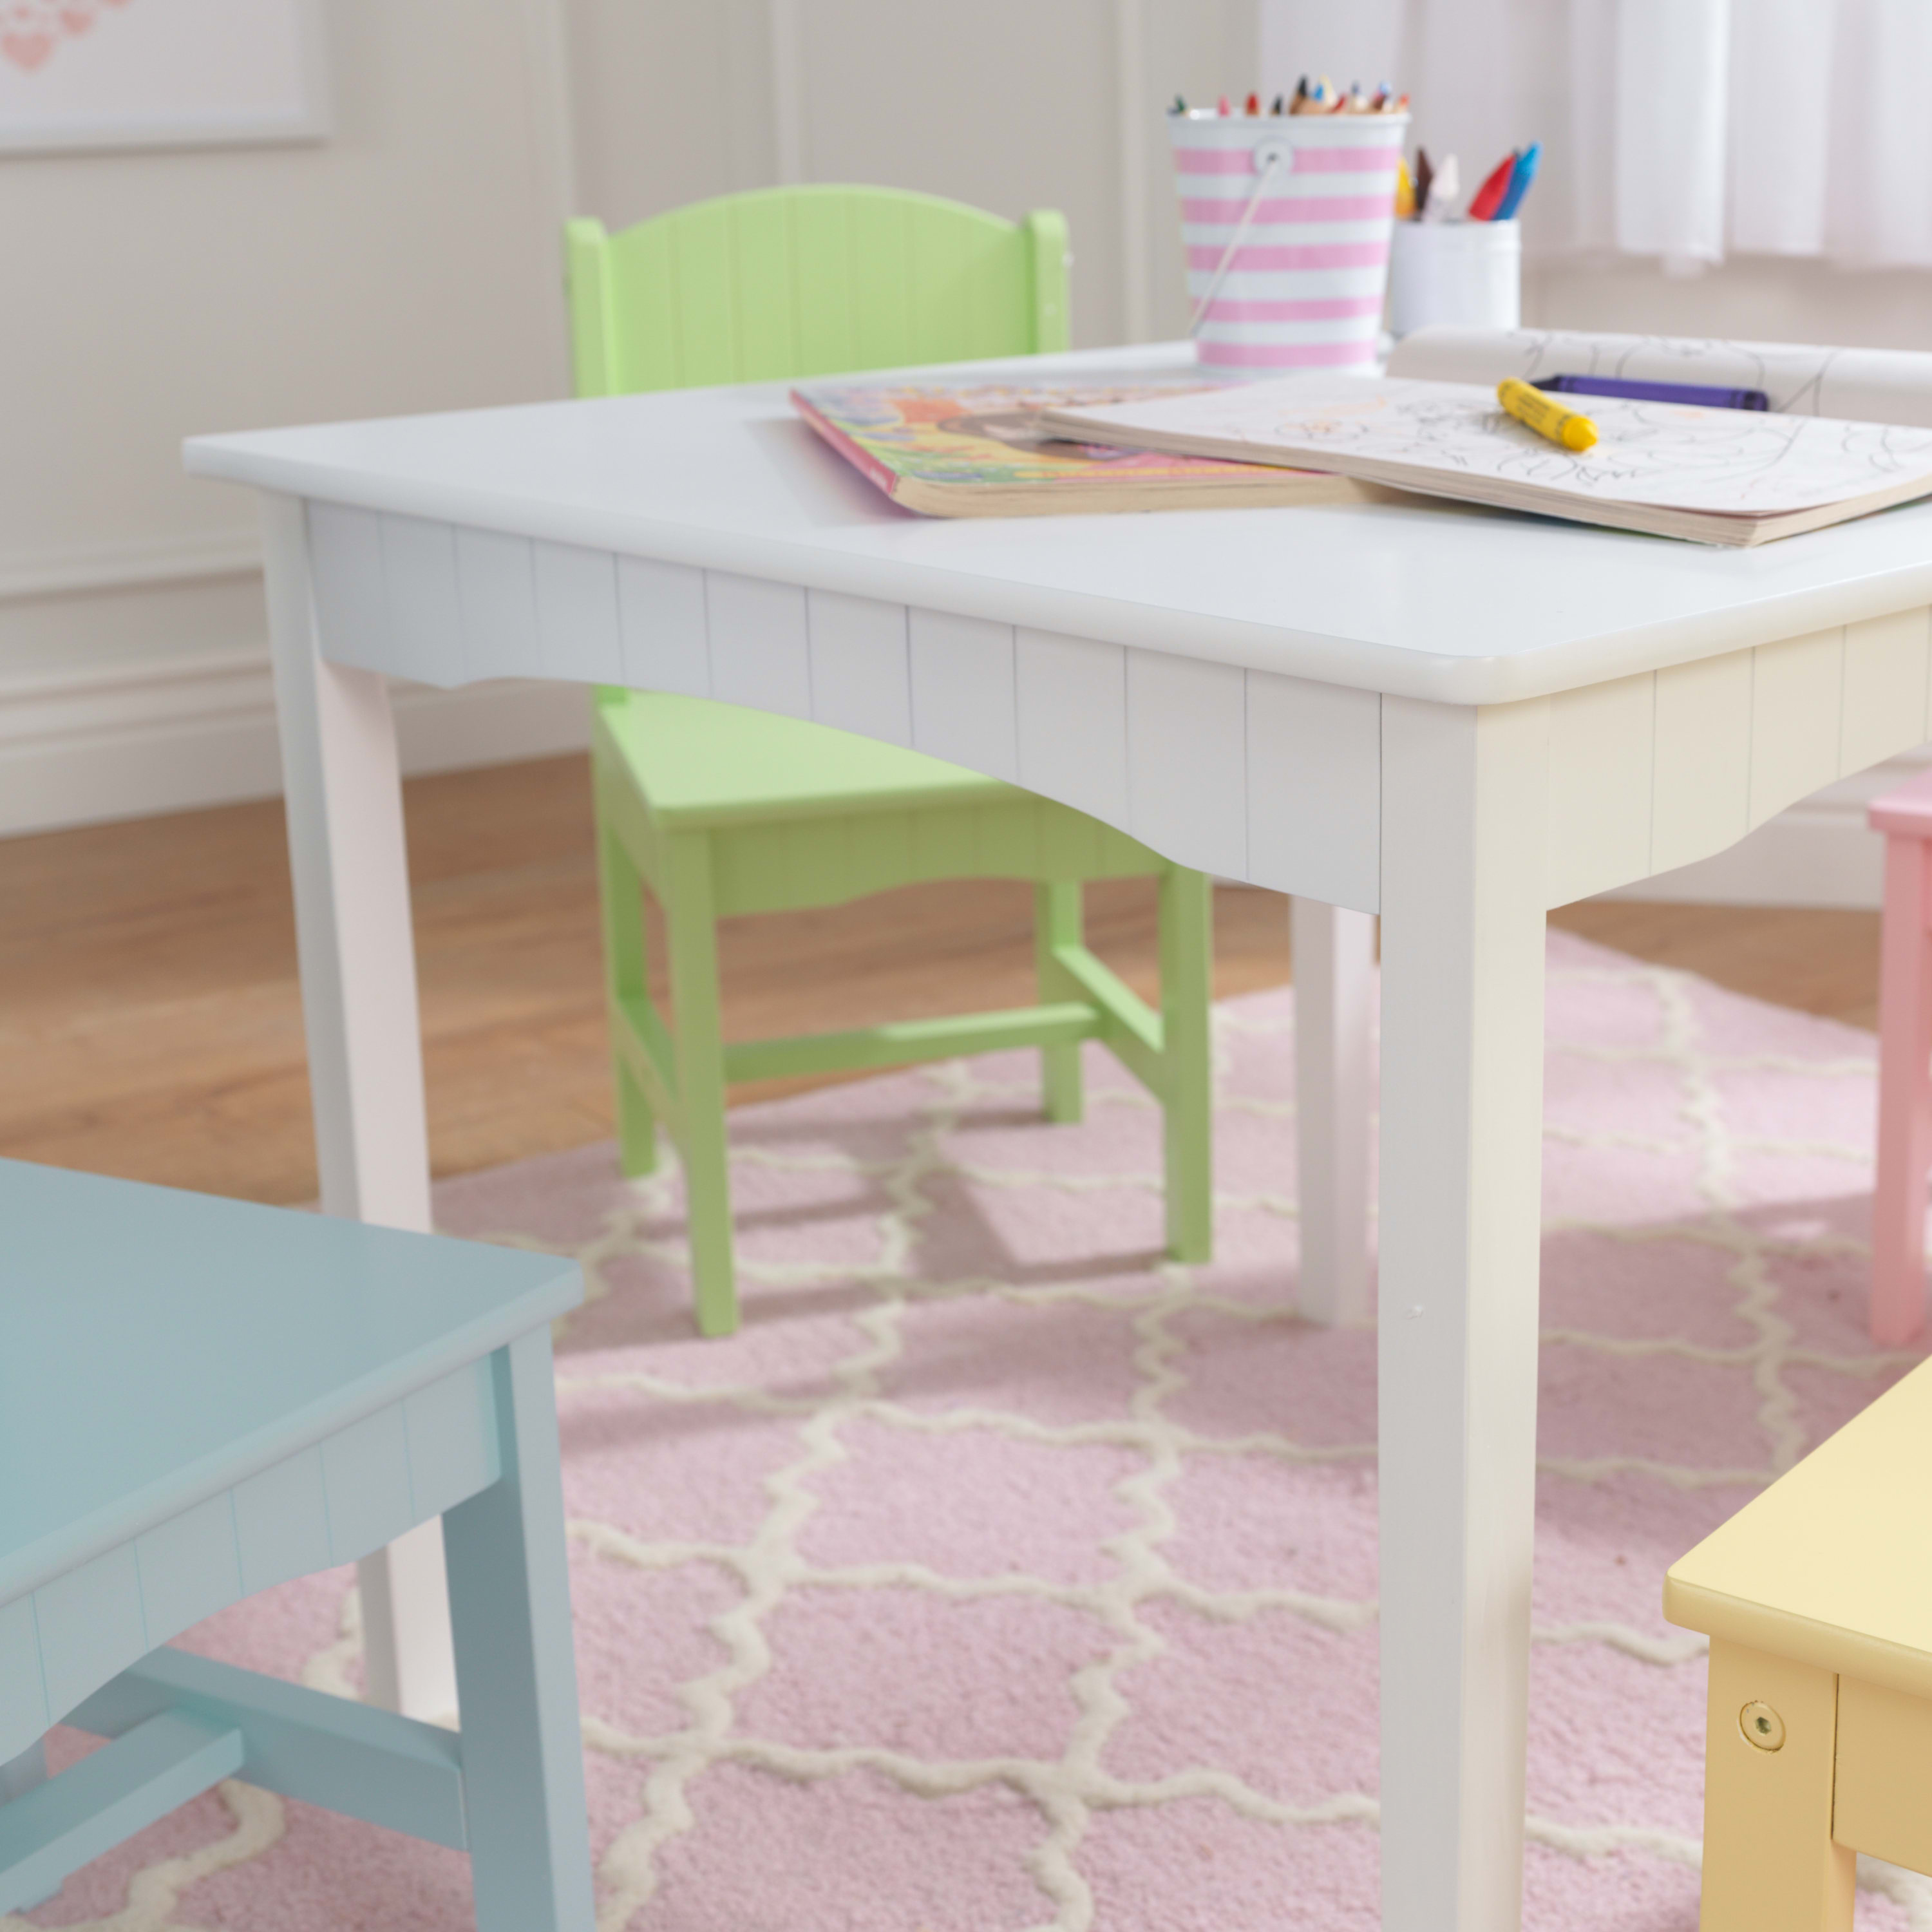 KidKraft Nantucket Children's Wooden Table & 4 Chair Set, Pastel Colors - image 4 of 9